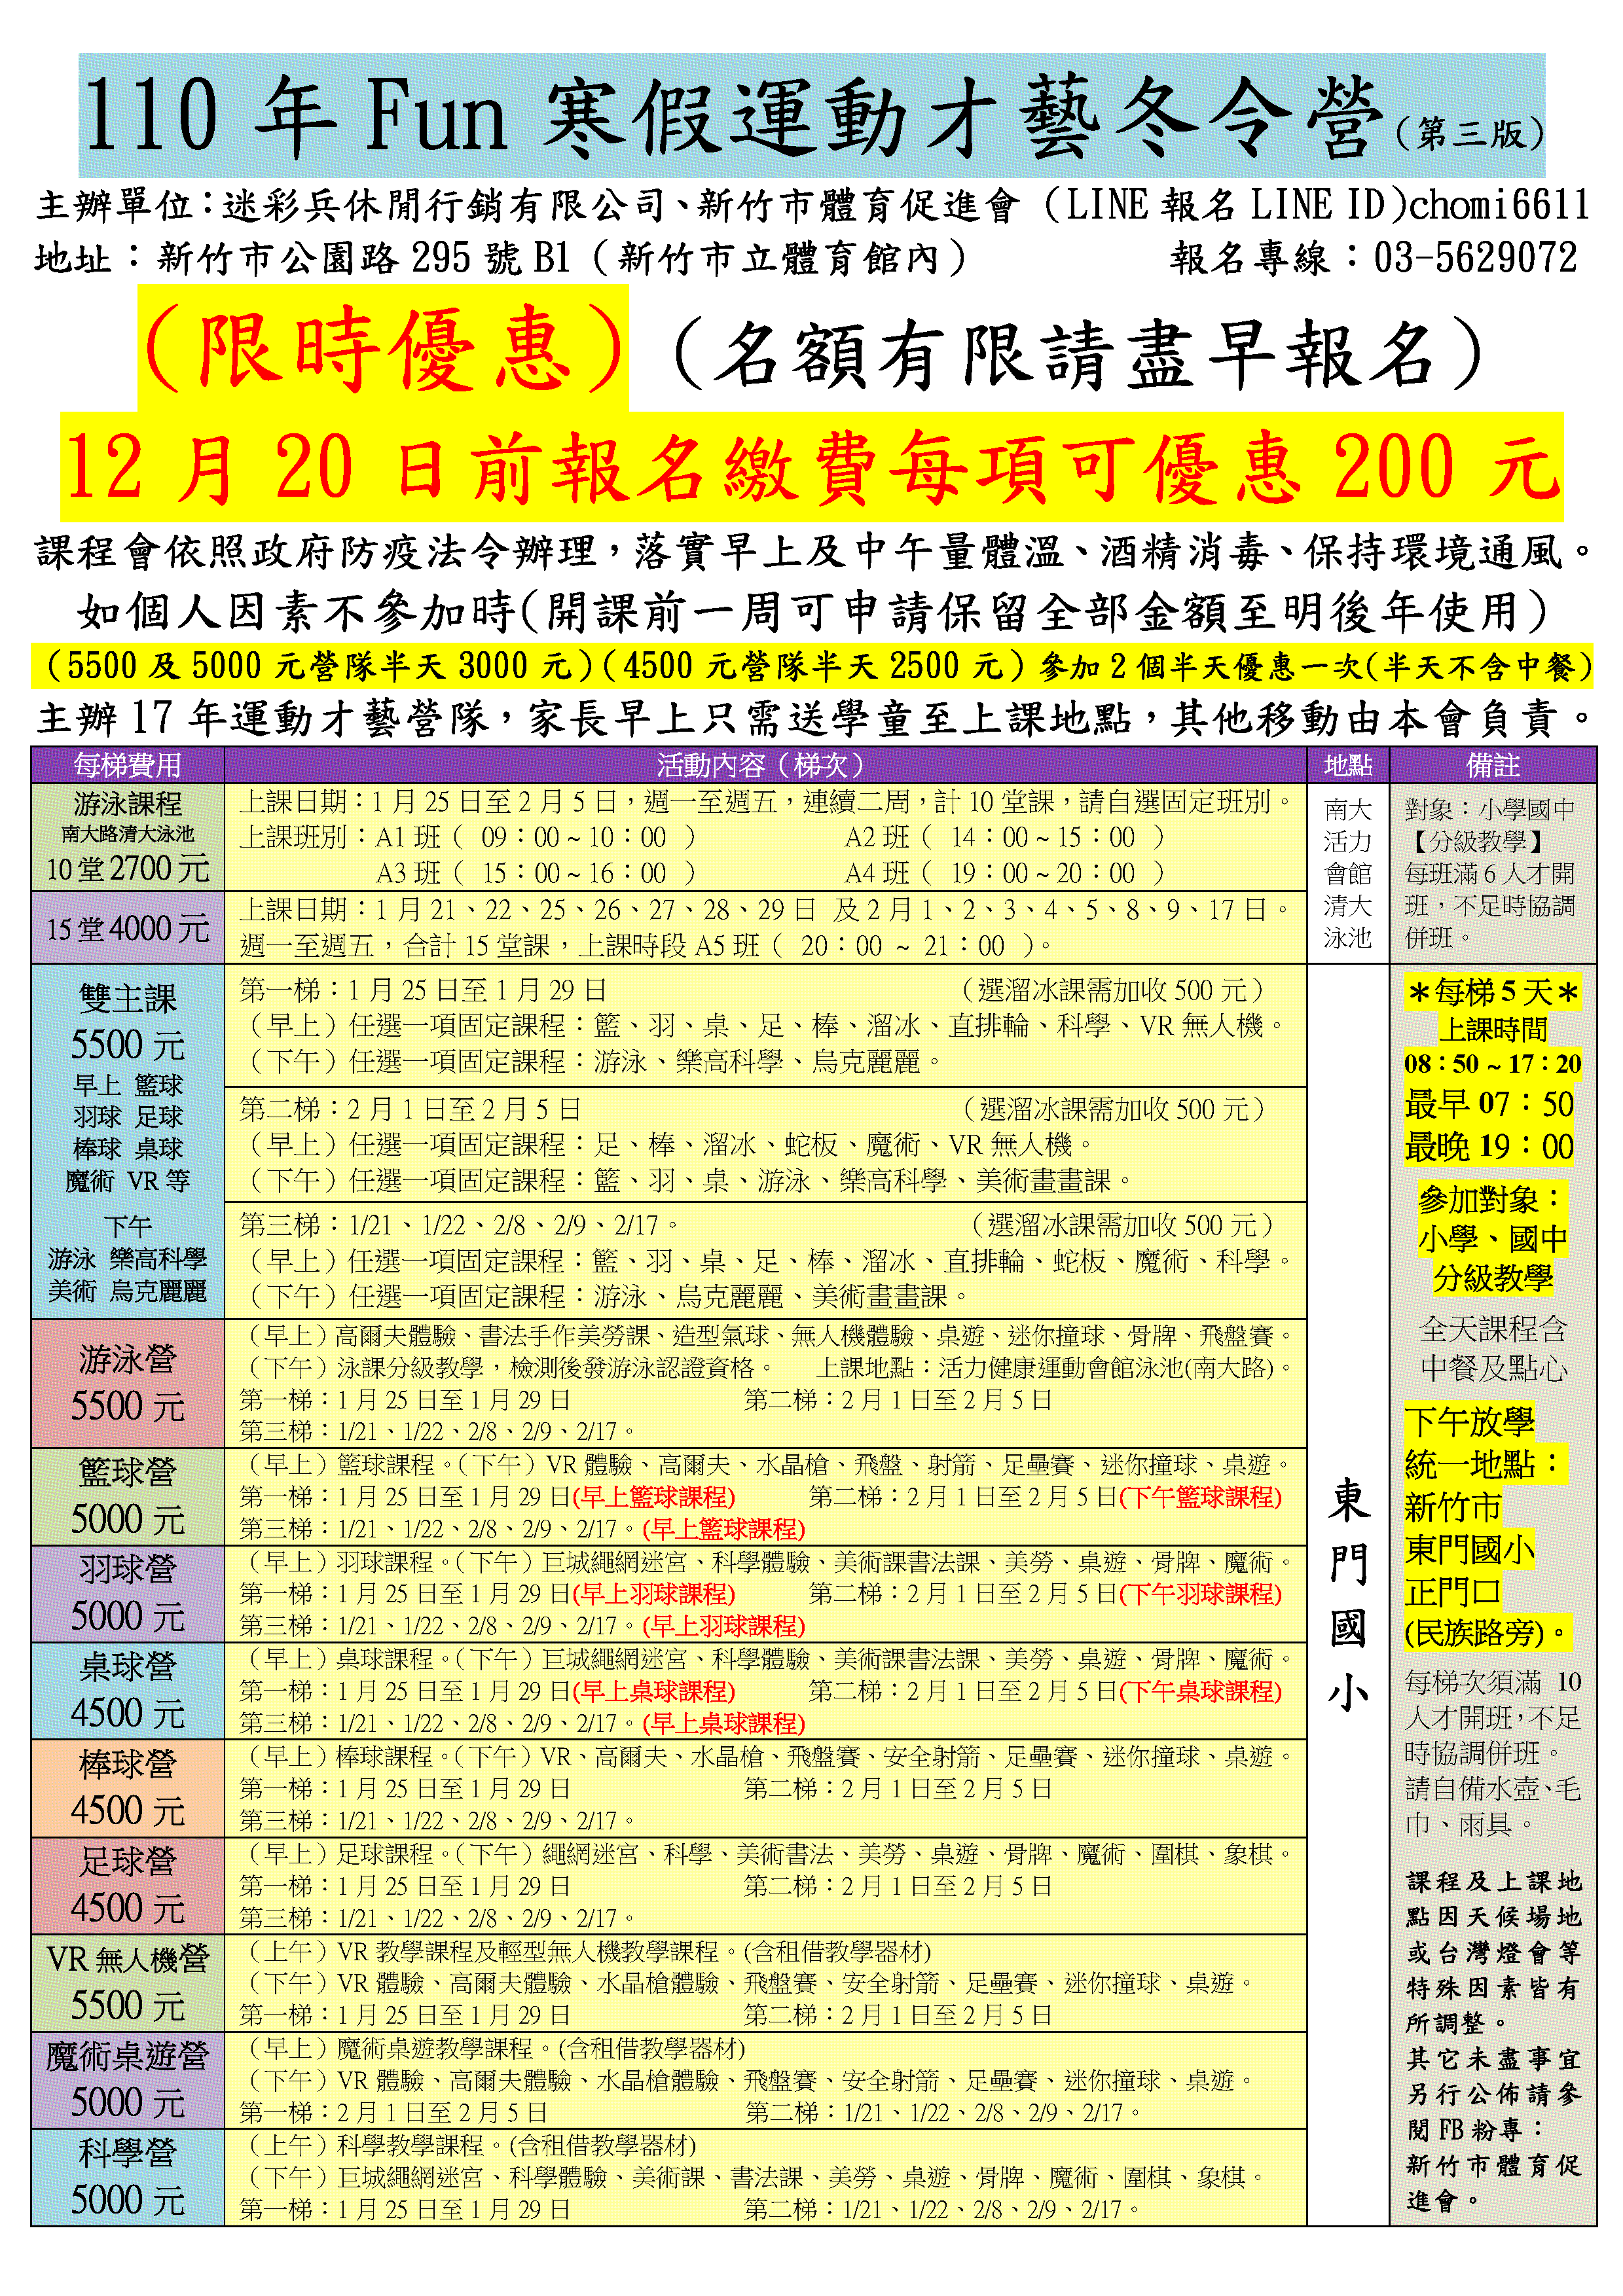 Microsoft Word - 110冬令營-第三波.doc.png